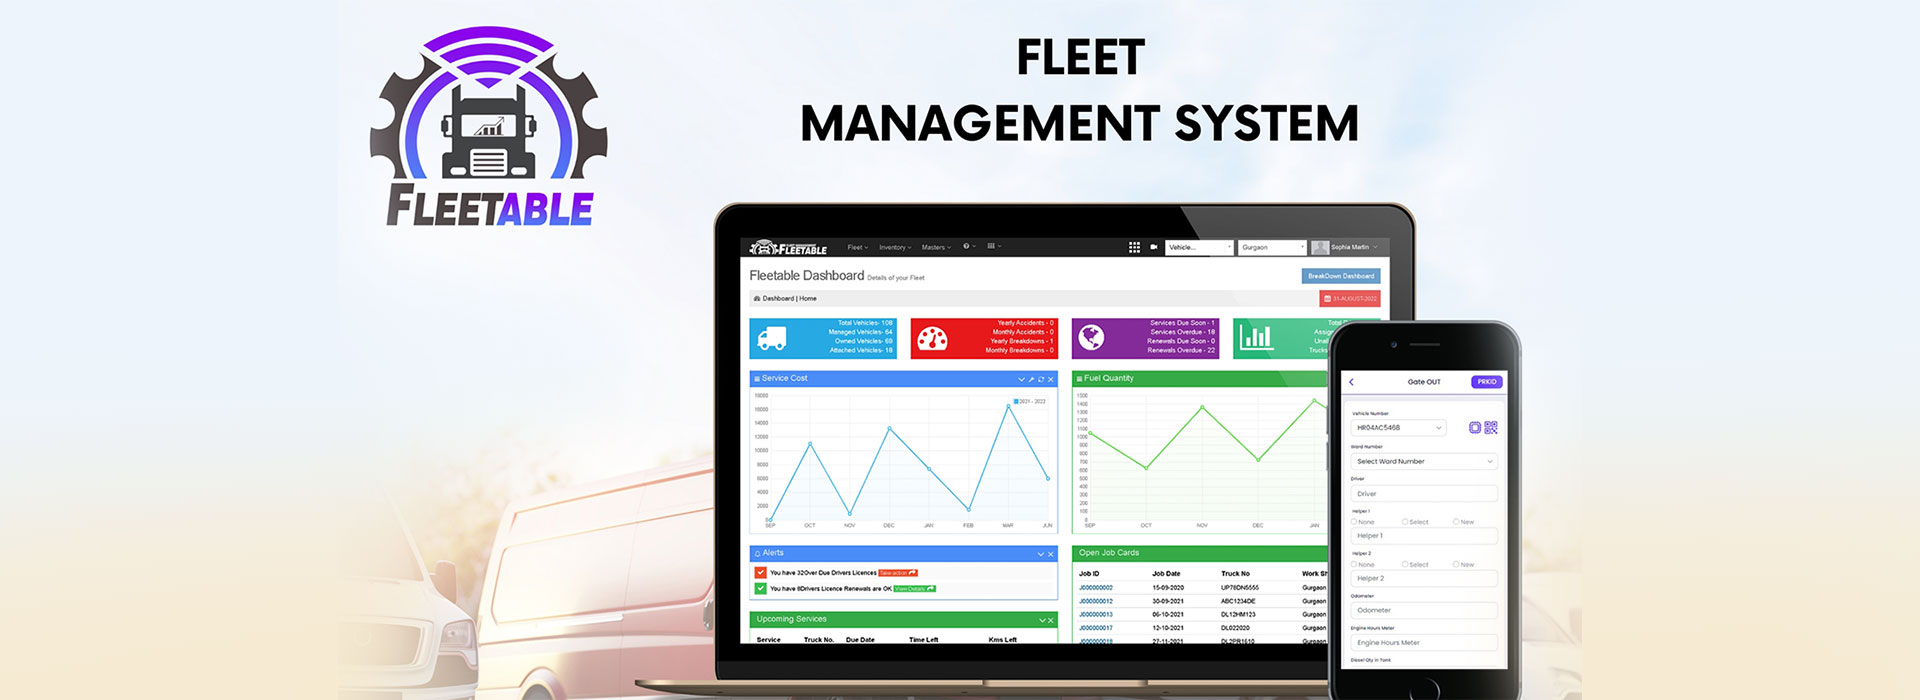 Fleet management system banner